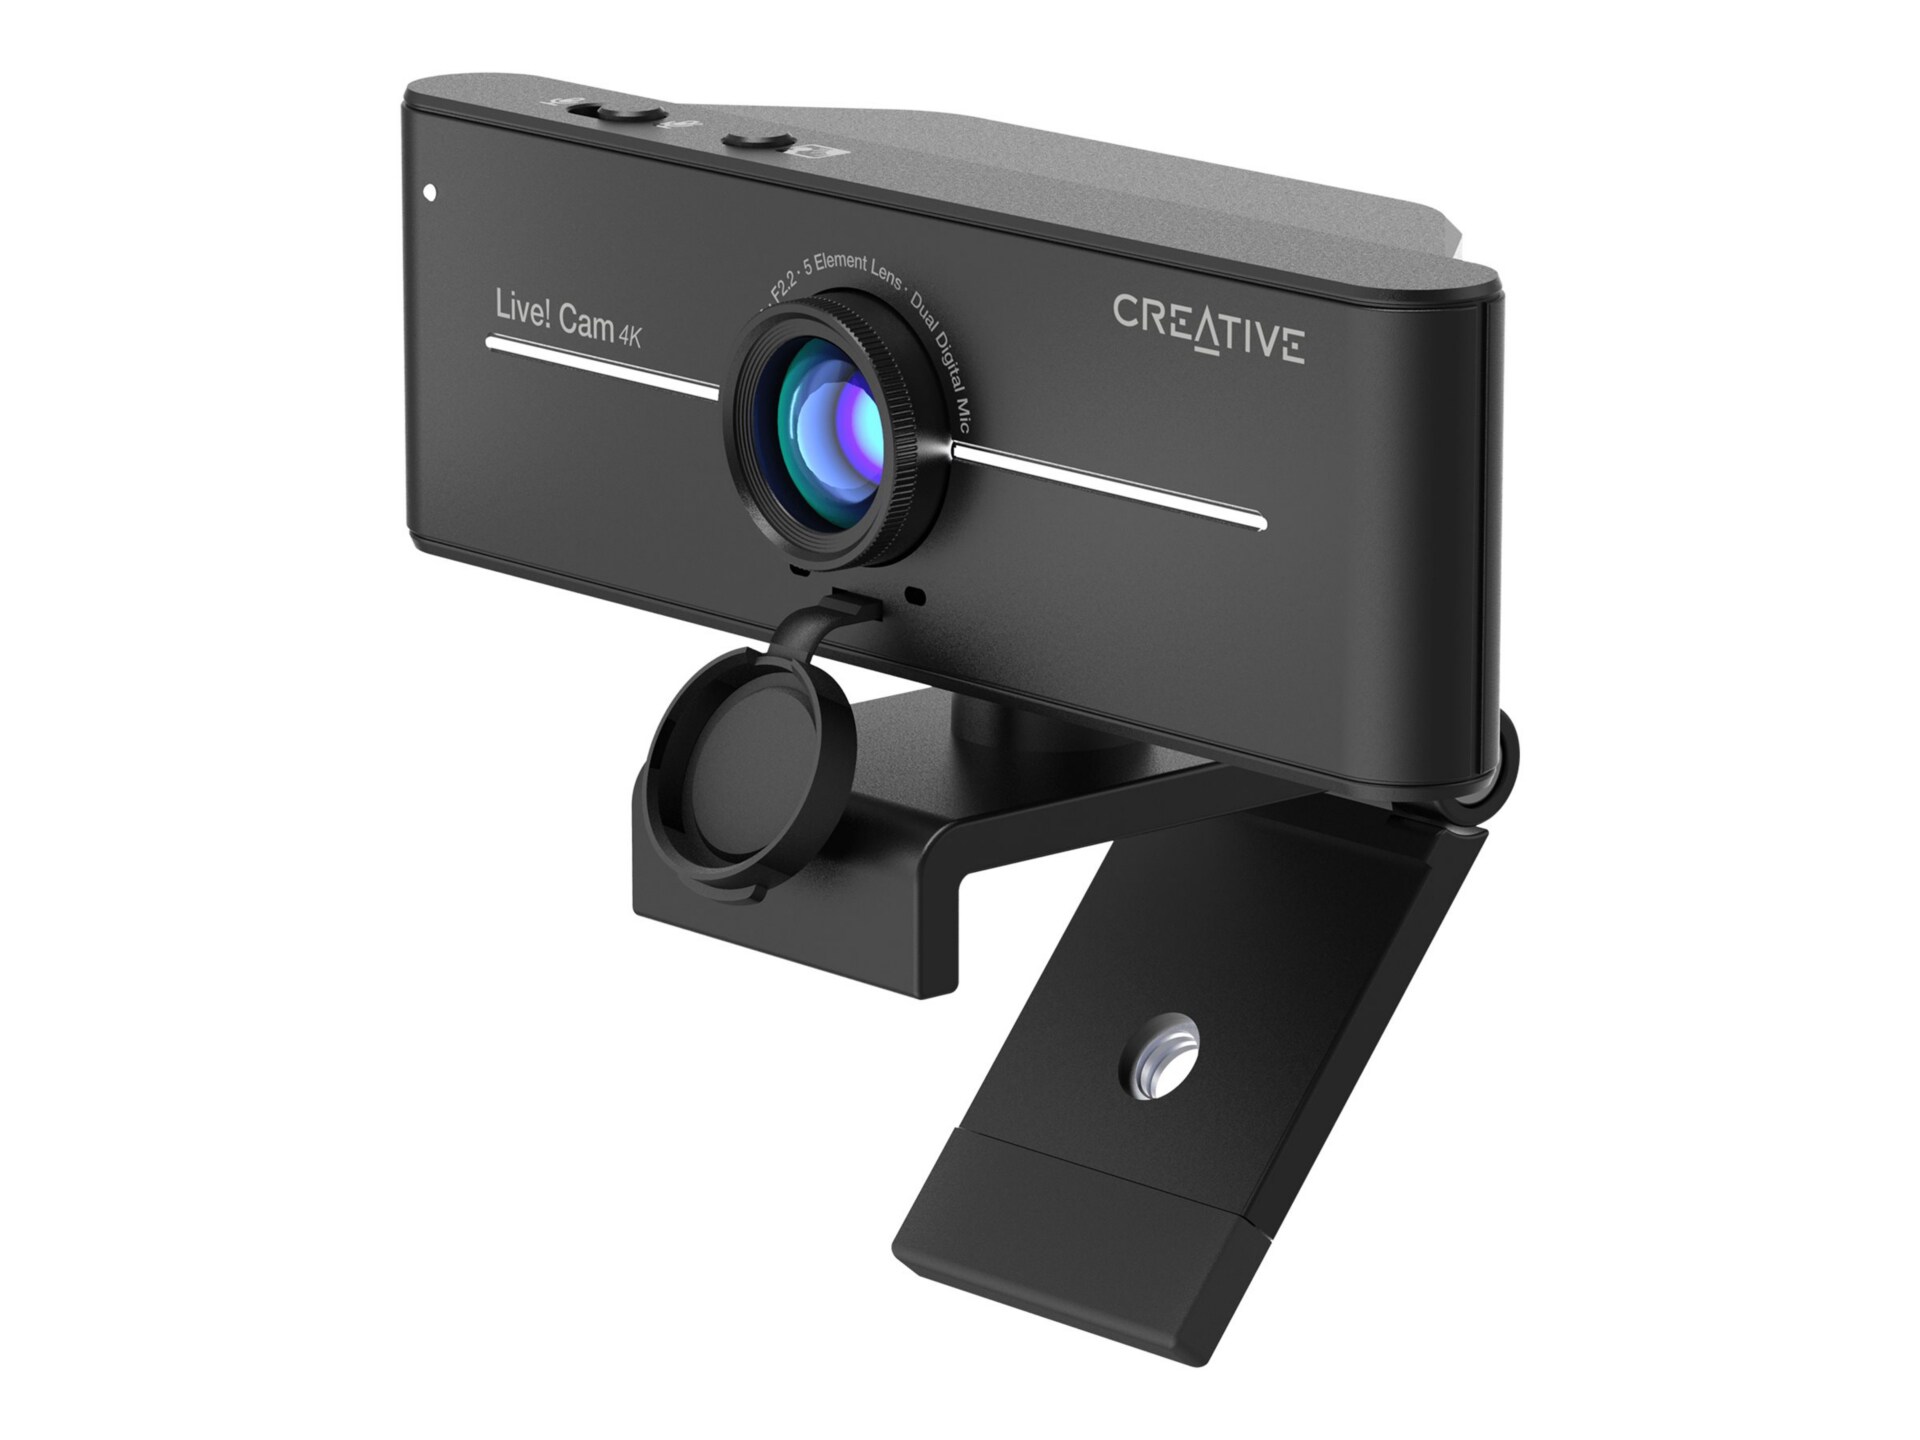 Creative Webcam - 40 fps - USB 2.0 - Retail